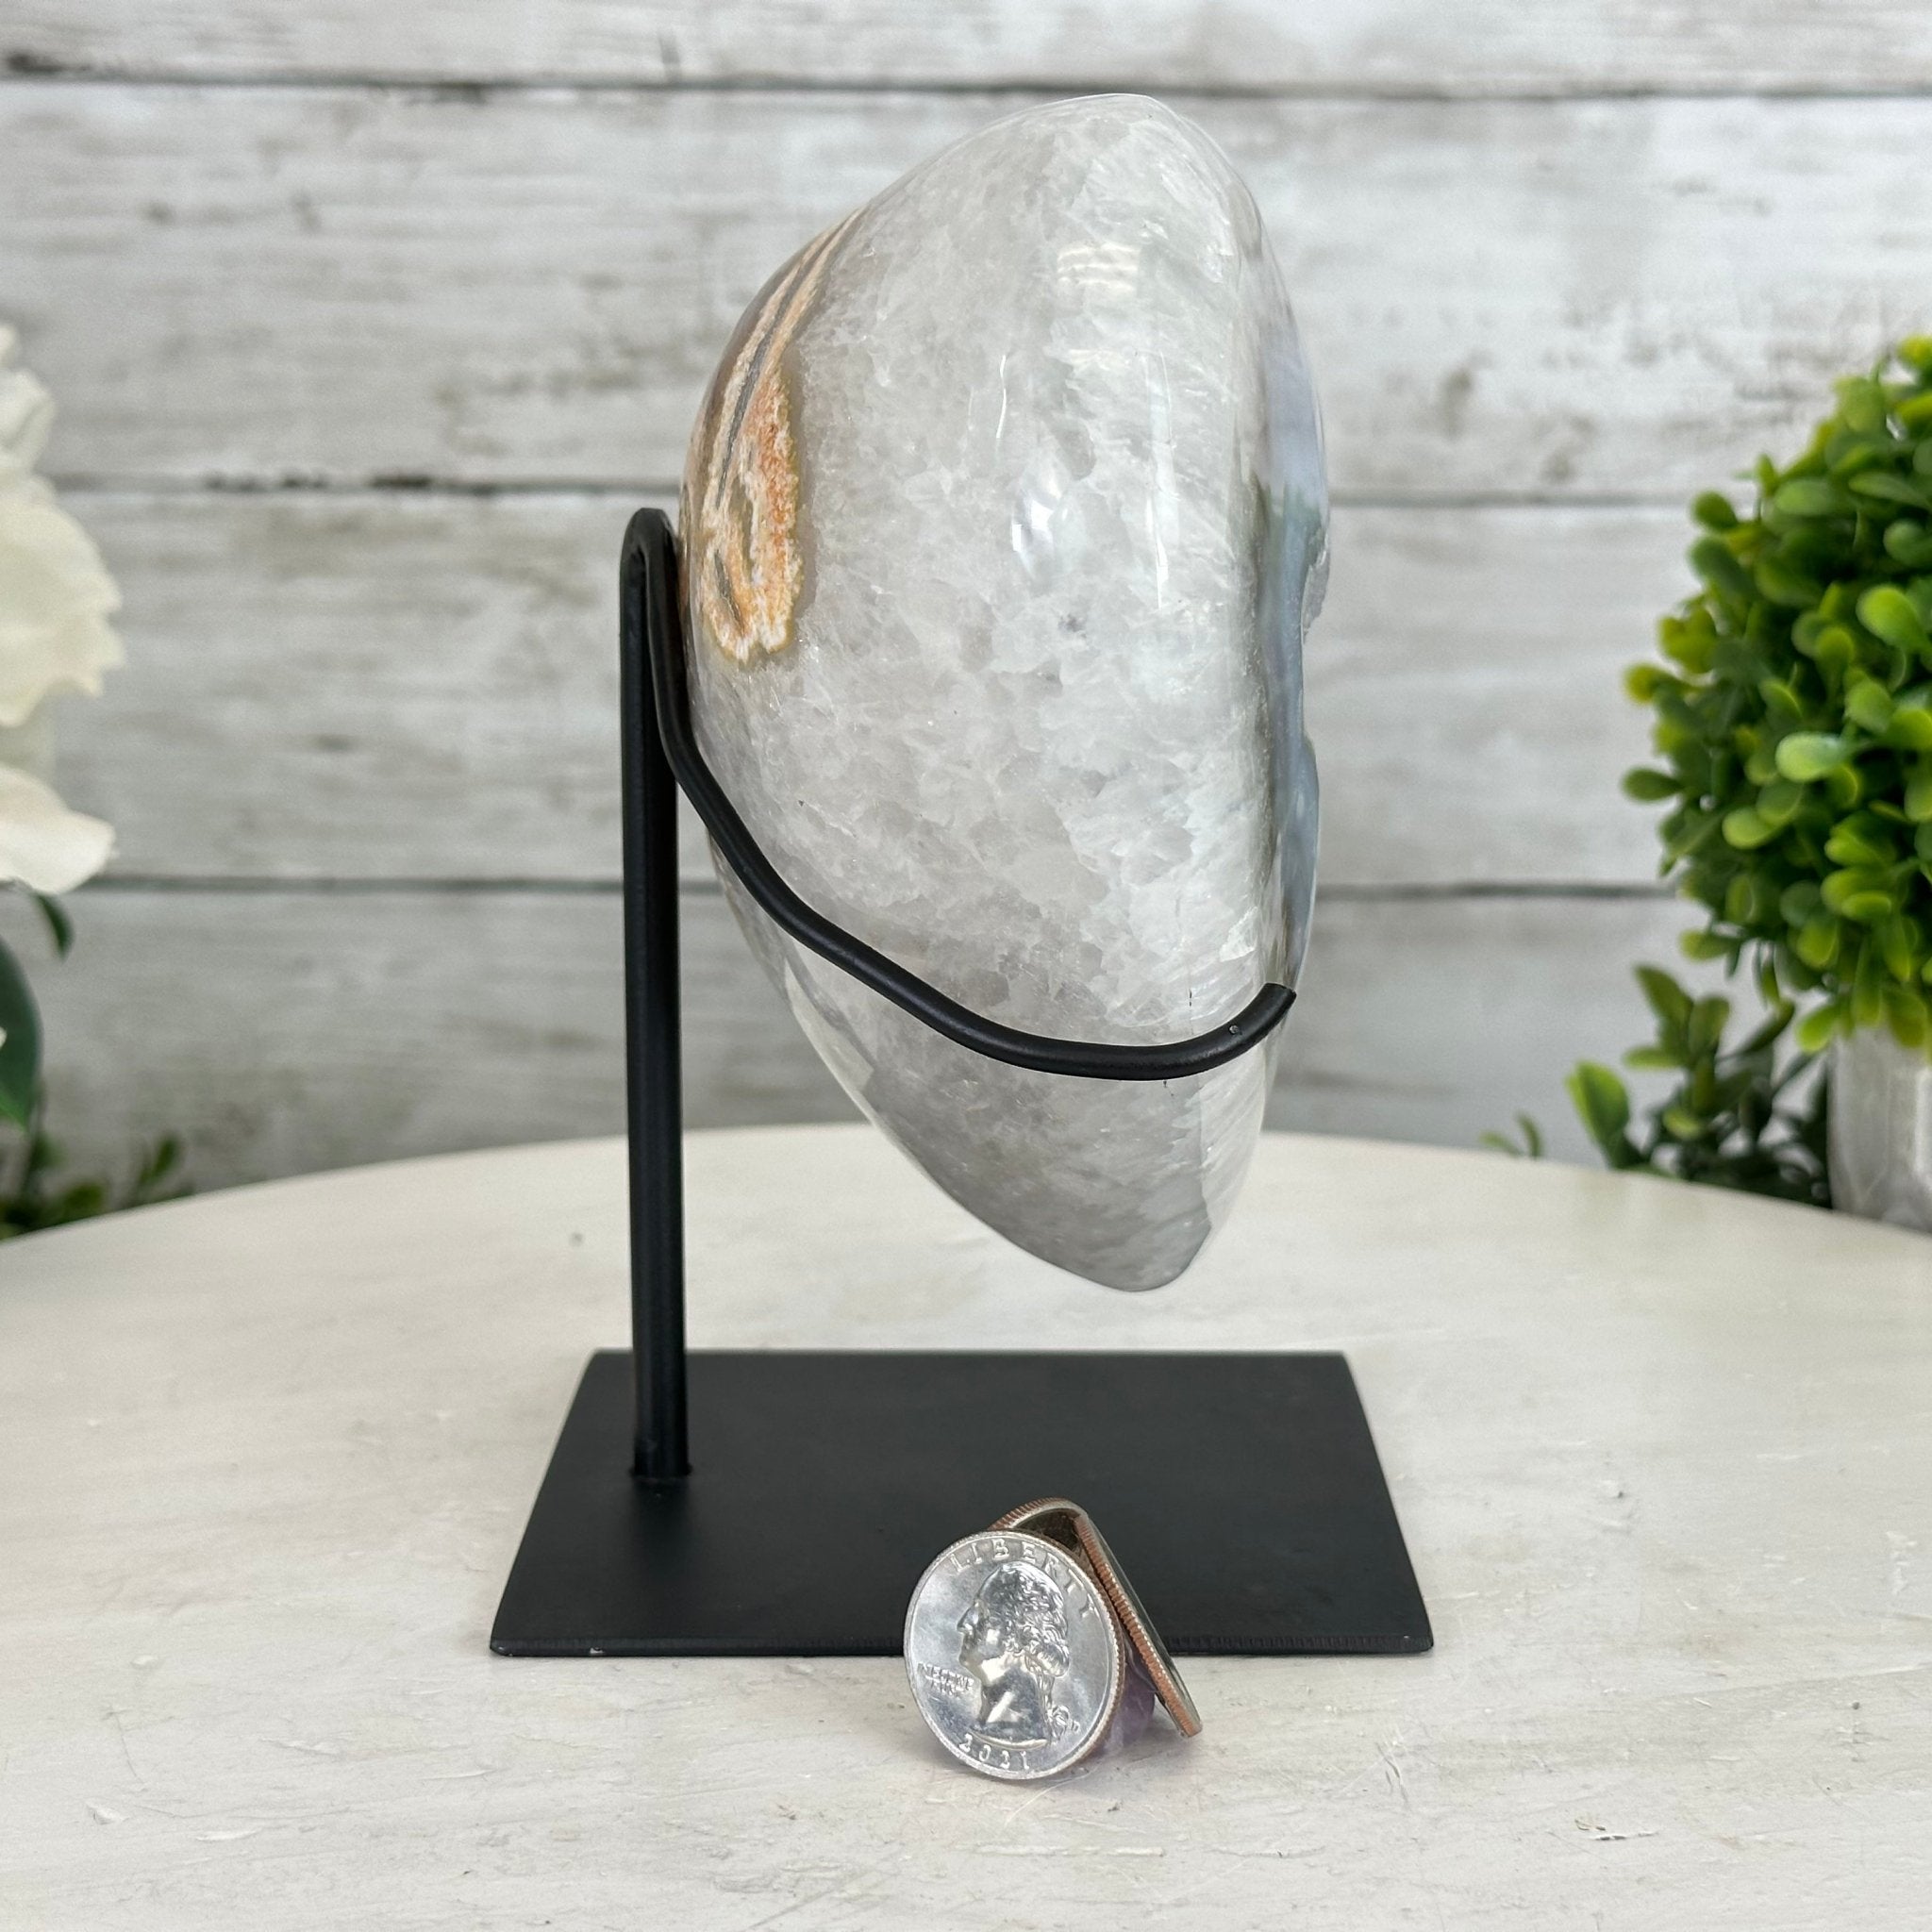 Polished Agate Heart Geode on a Metal Stand, 4.6 lbs & 6.7" Tall, Model #5468-0071 by Brazil Gems - Brazil GemsBrazil GemsPolished Agate Heart Geode on a Metal Stand, 4.6 lbs & 6.7" Tall, Model #5468-0071 by Brazil GemsHearts5468-0071